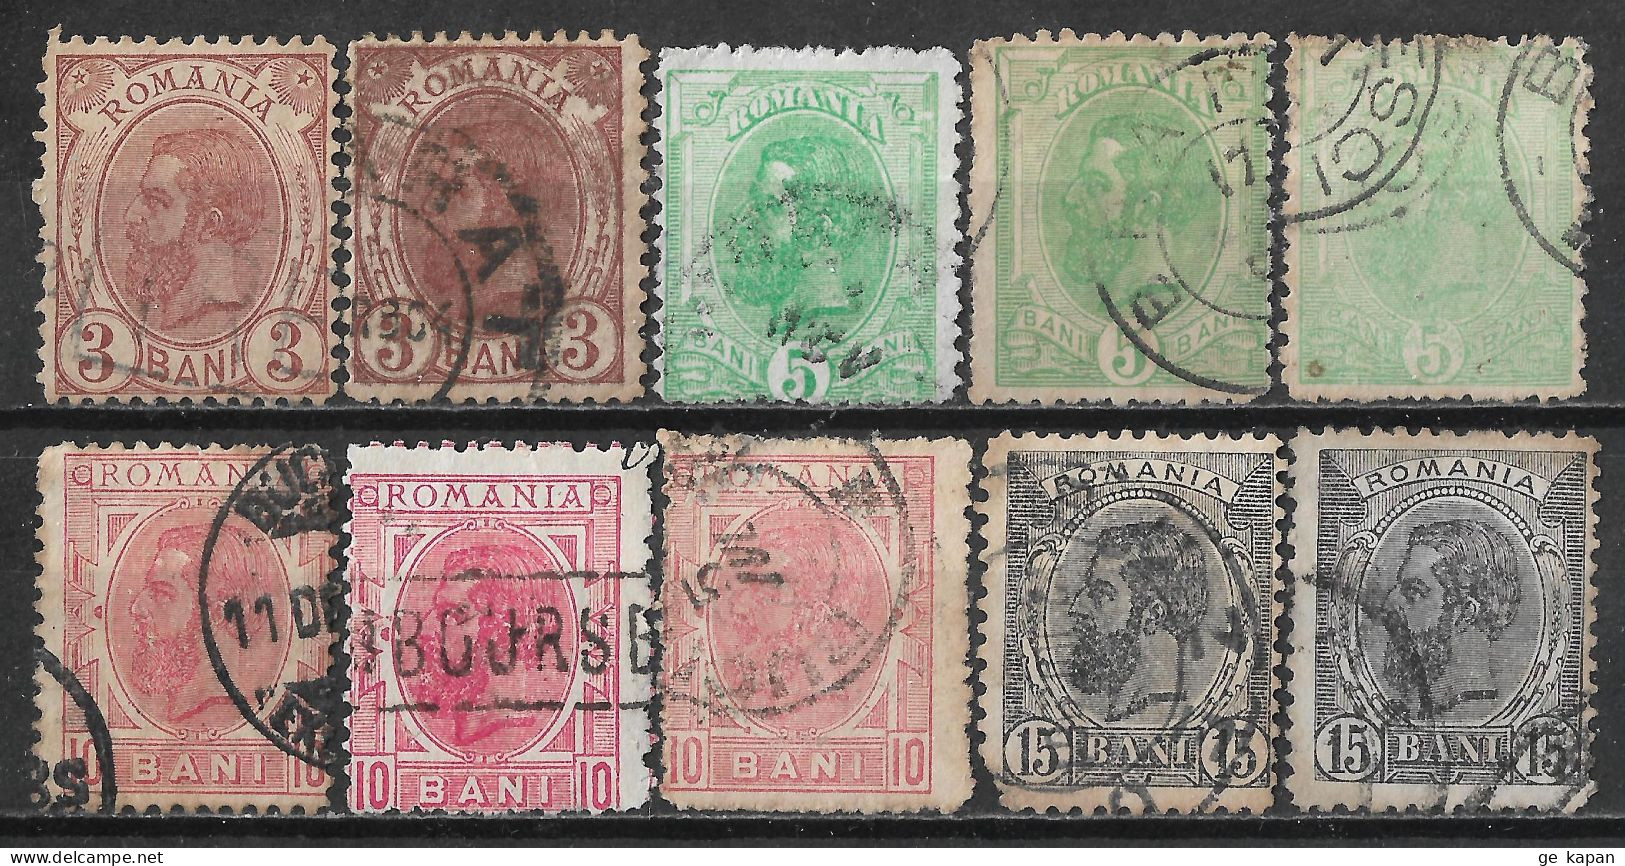 1900 ROMANIA SET OF 10 USED STAMPS (Scott # 135-138) CV $9.70 - Oblitérés